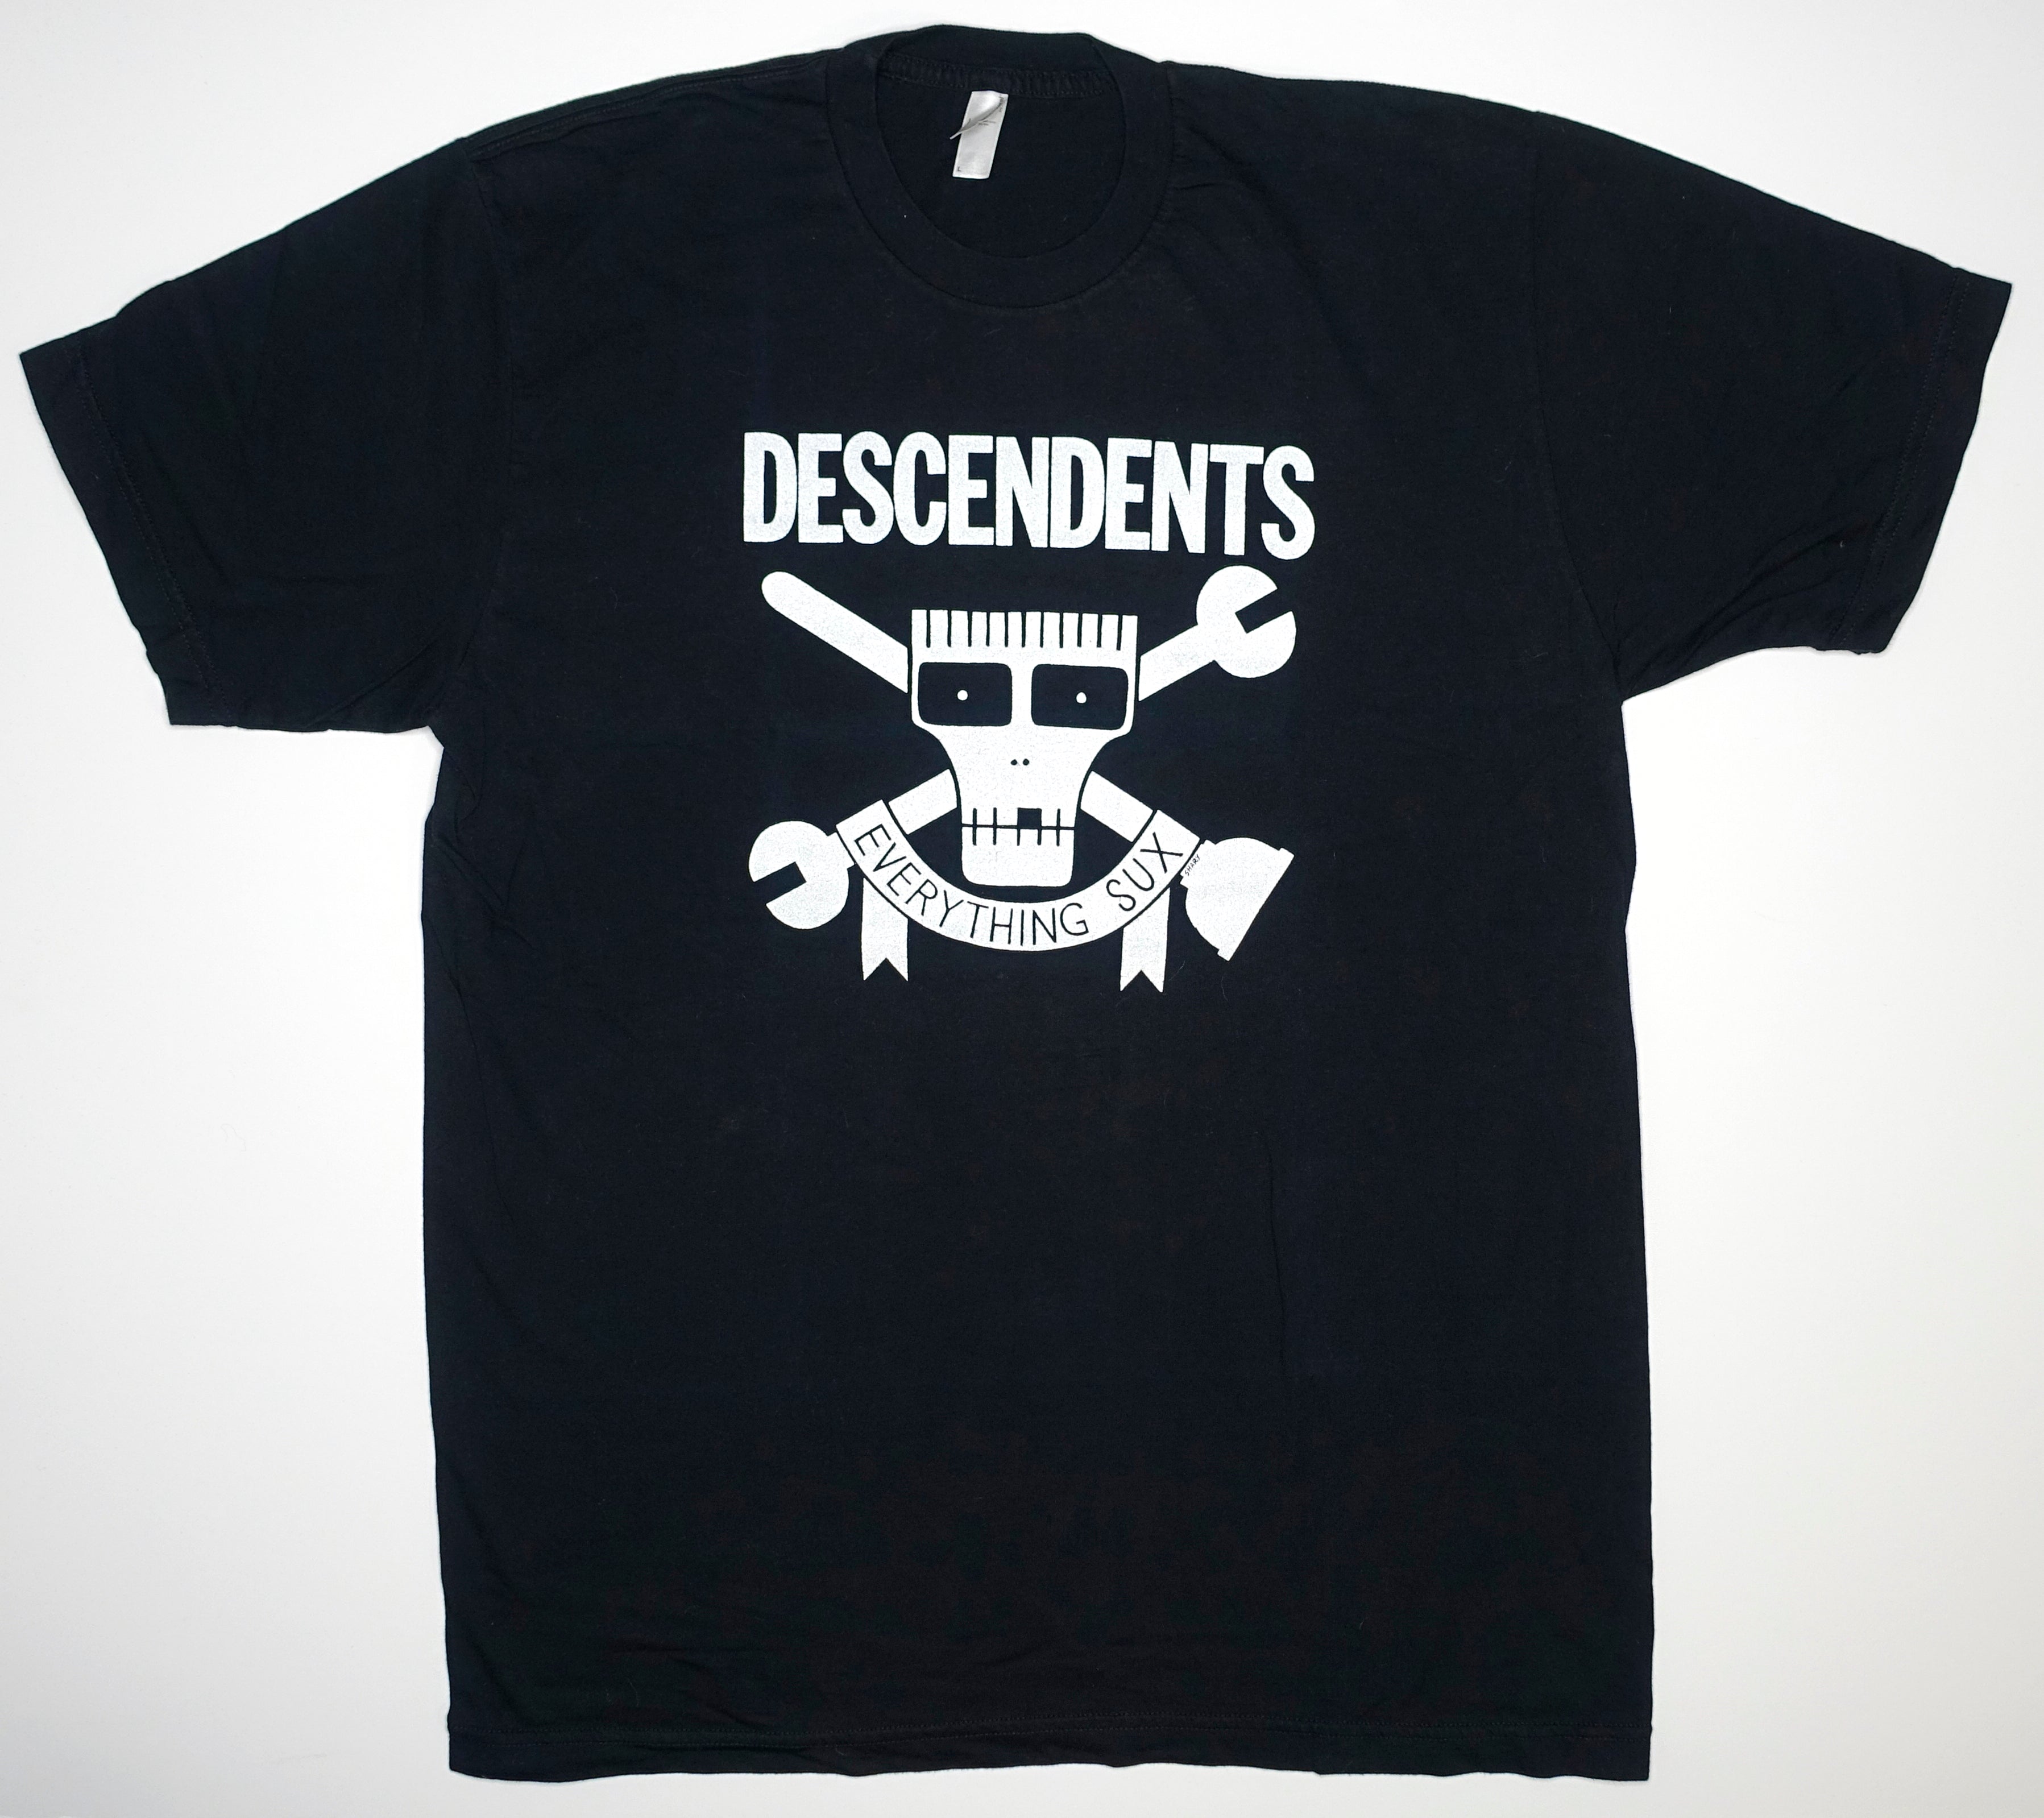 Descendents - Everything Sucks 1996 Tour Shirt (B/W Version) Size Large